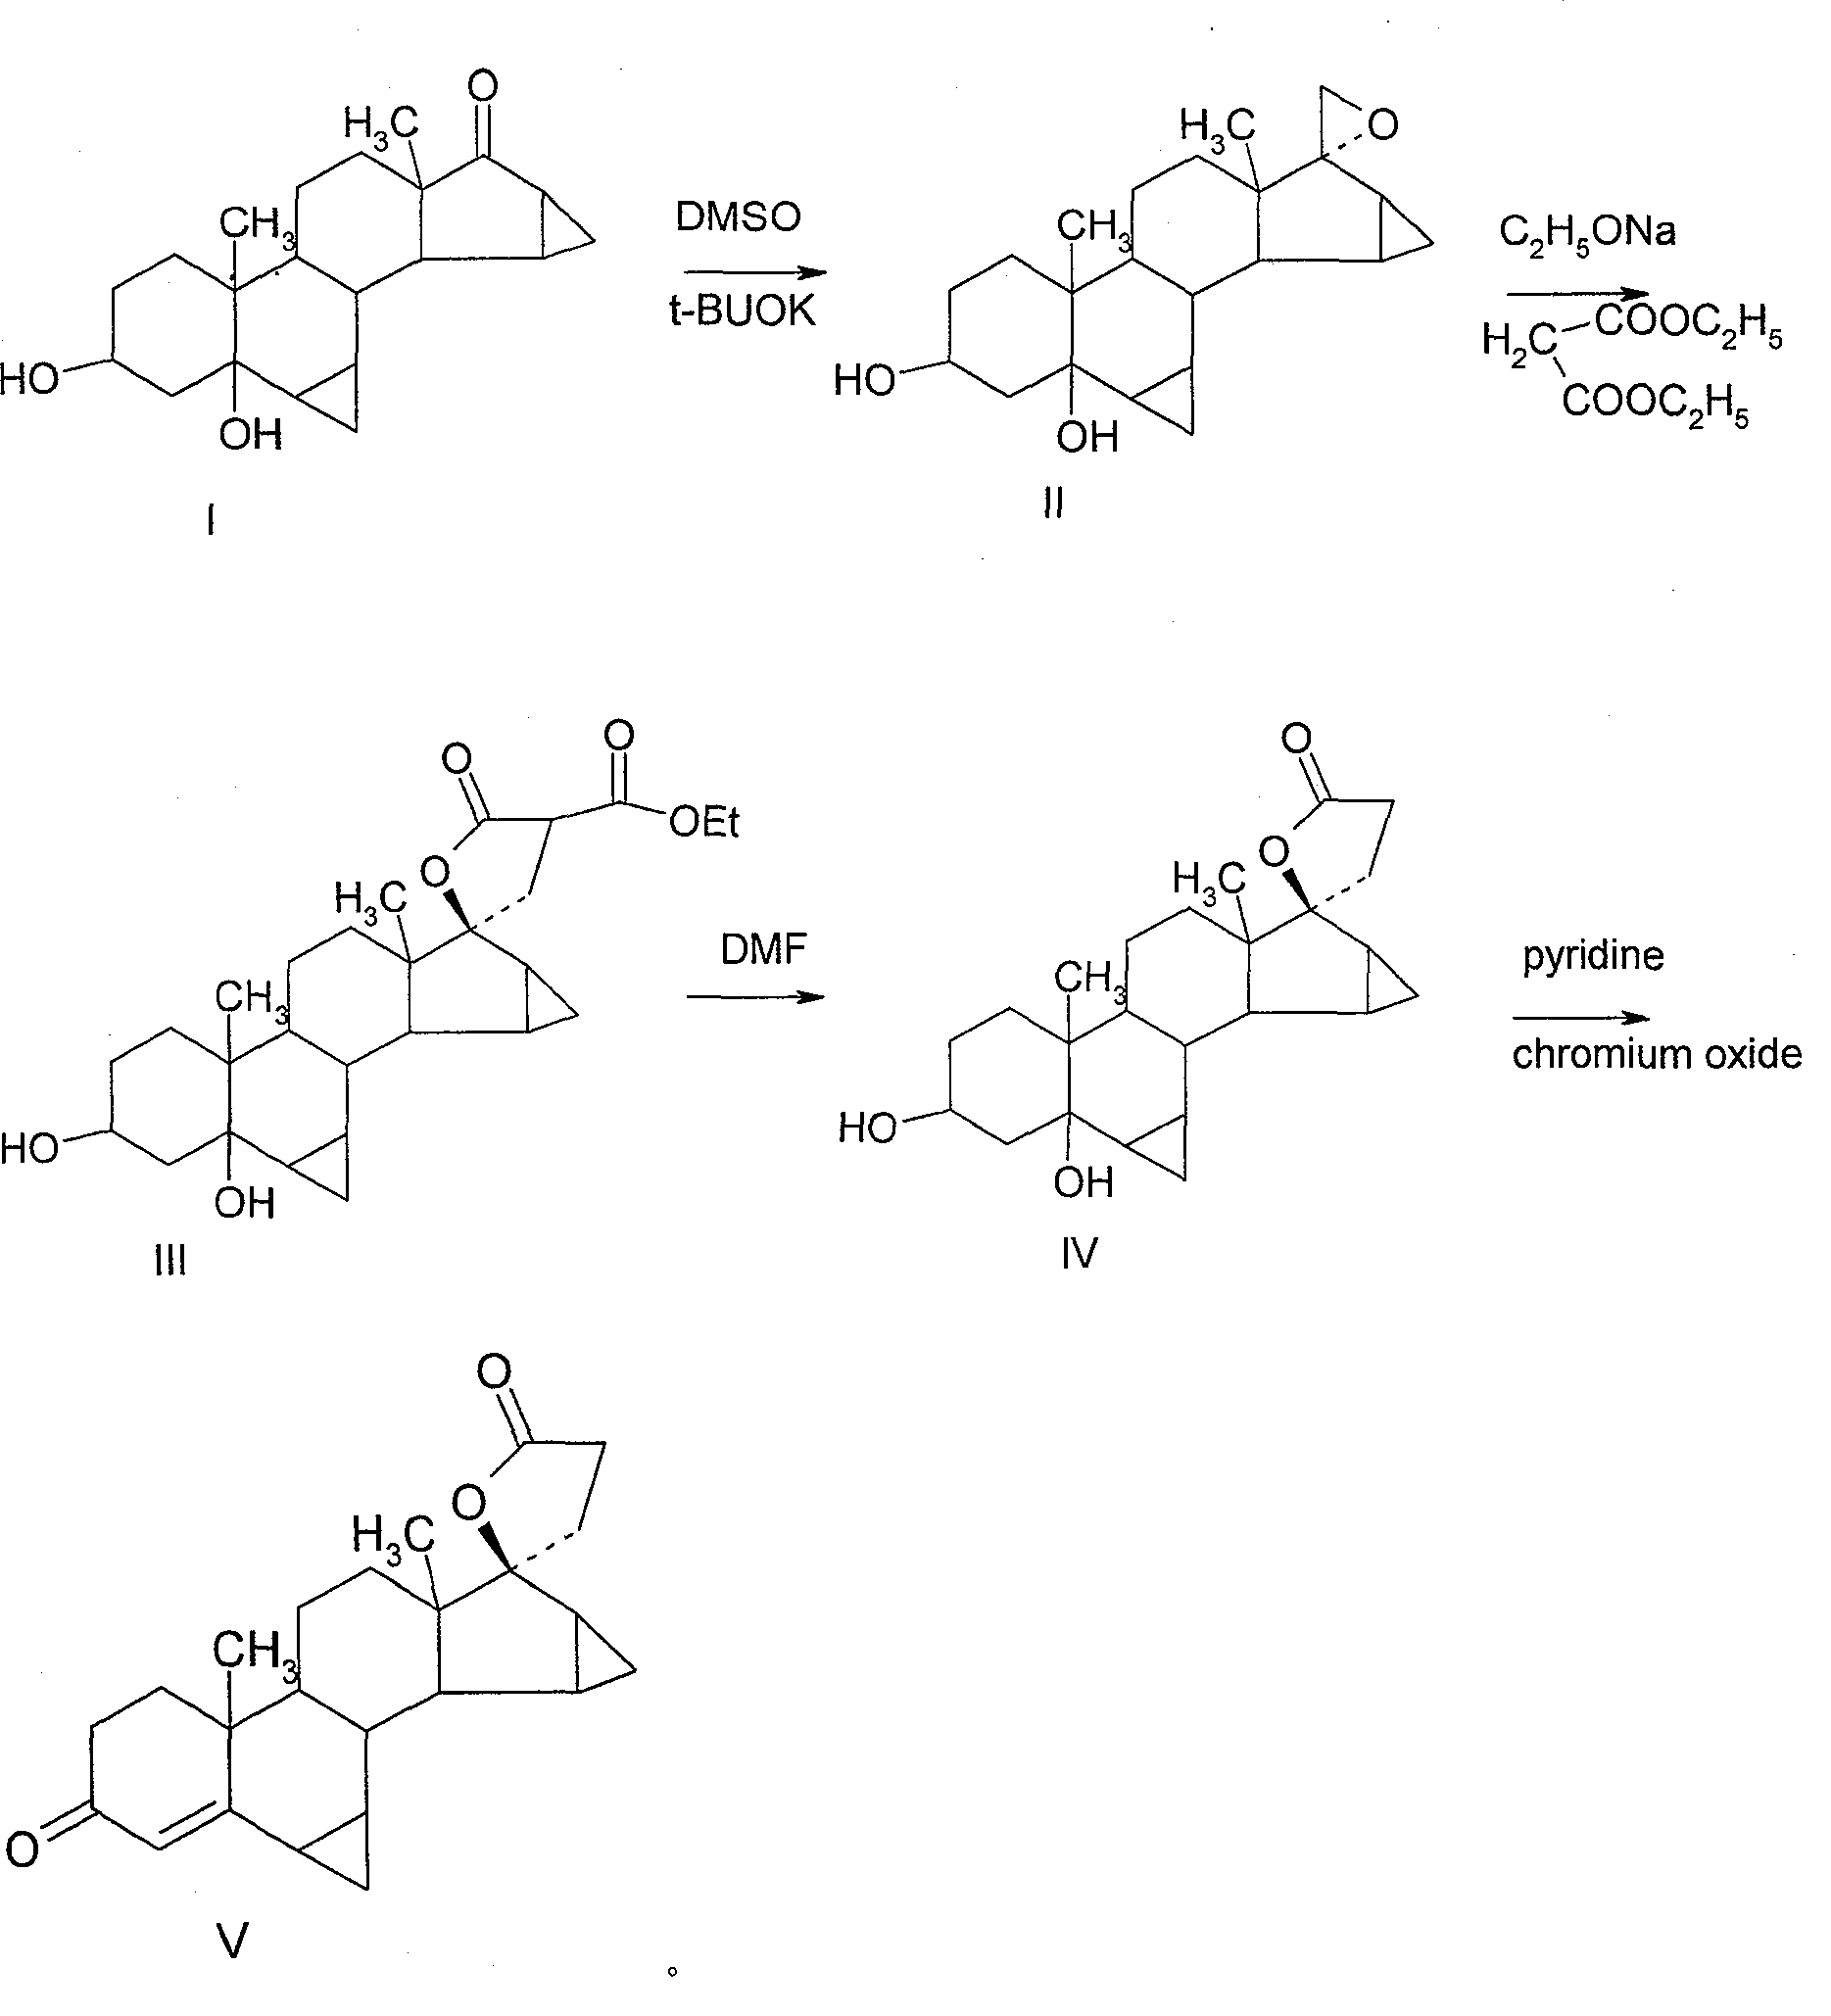 Method for synthesizing Drospirenone